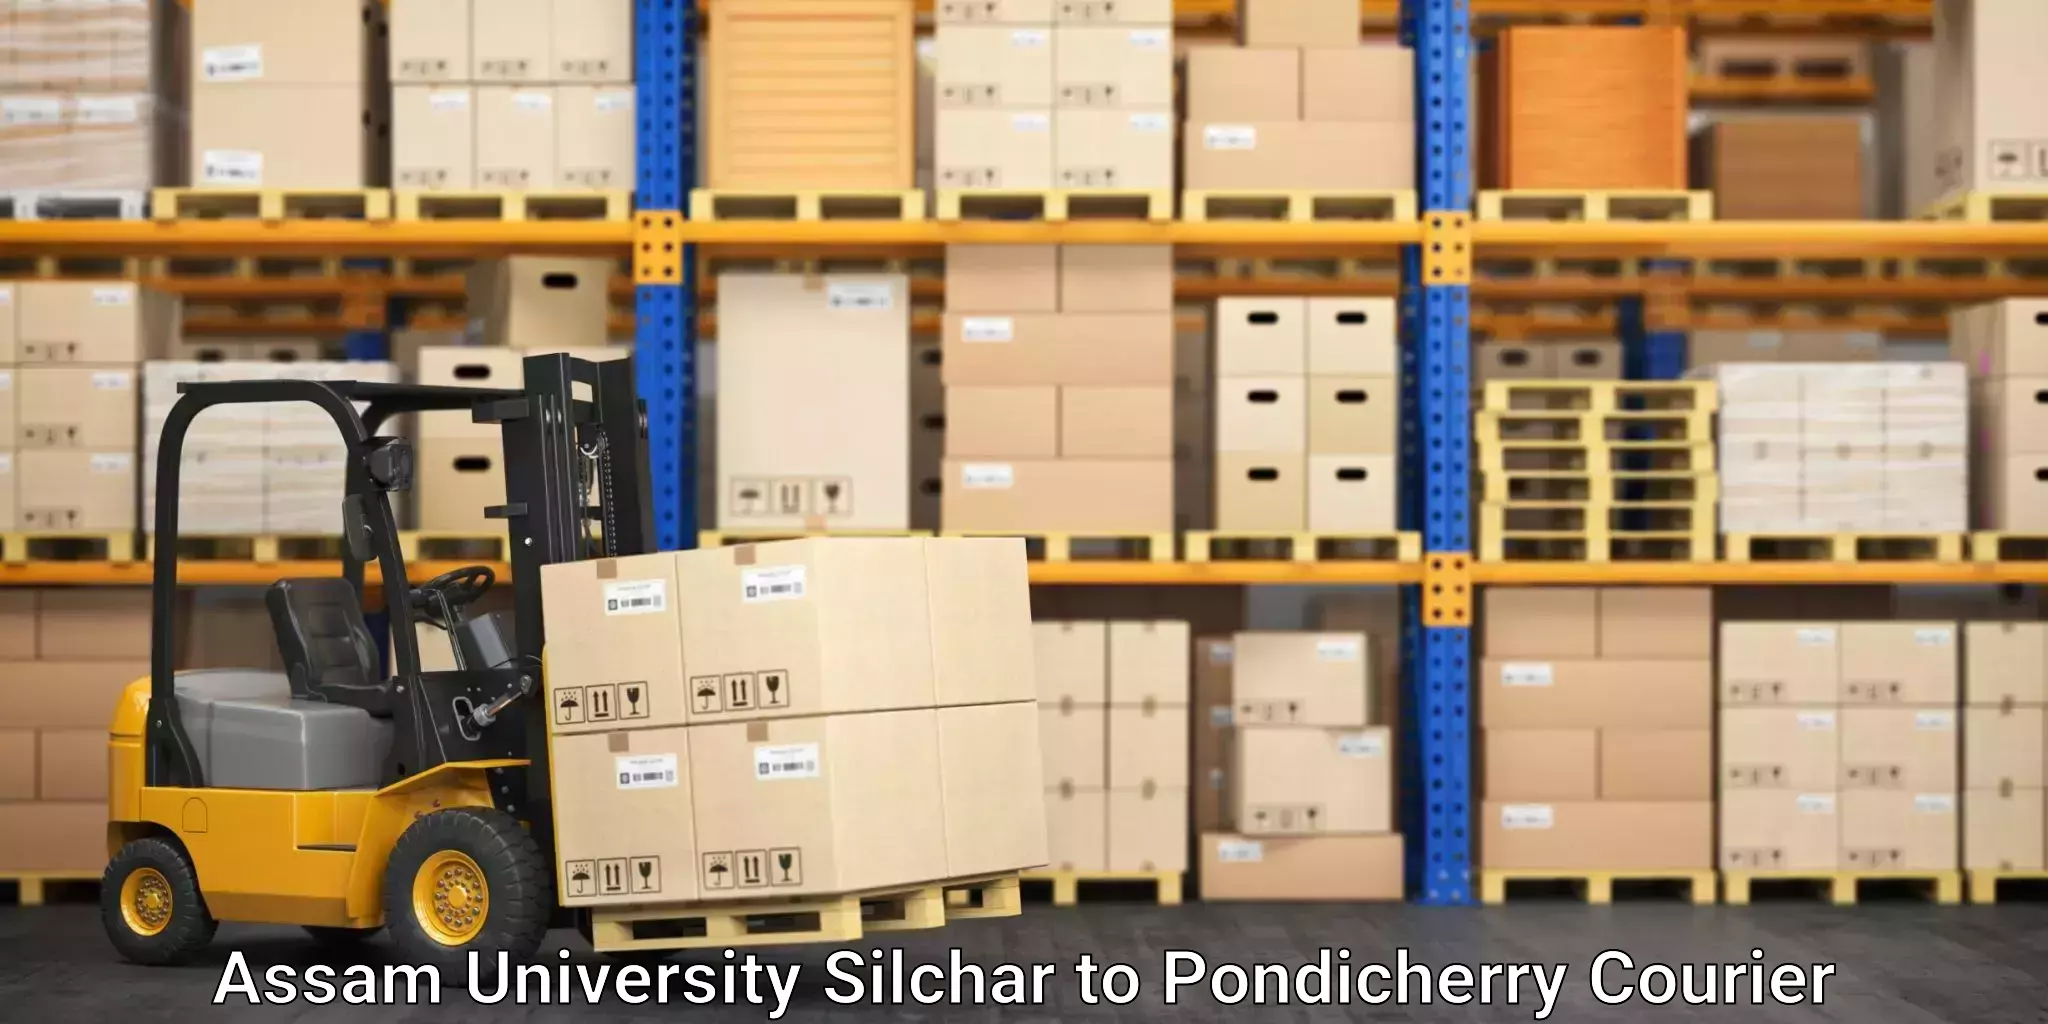 Express delivery capabilities Assam University Silchar to Pondicherry University